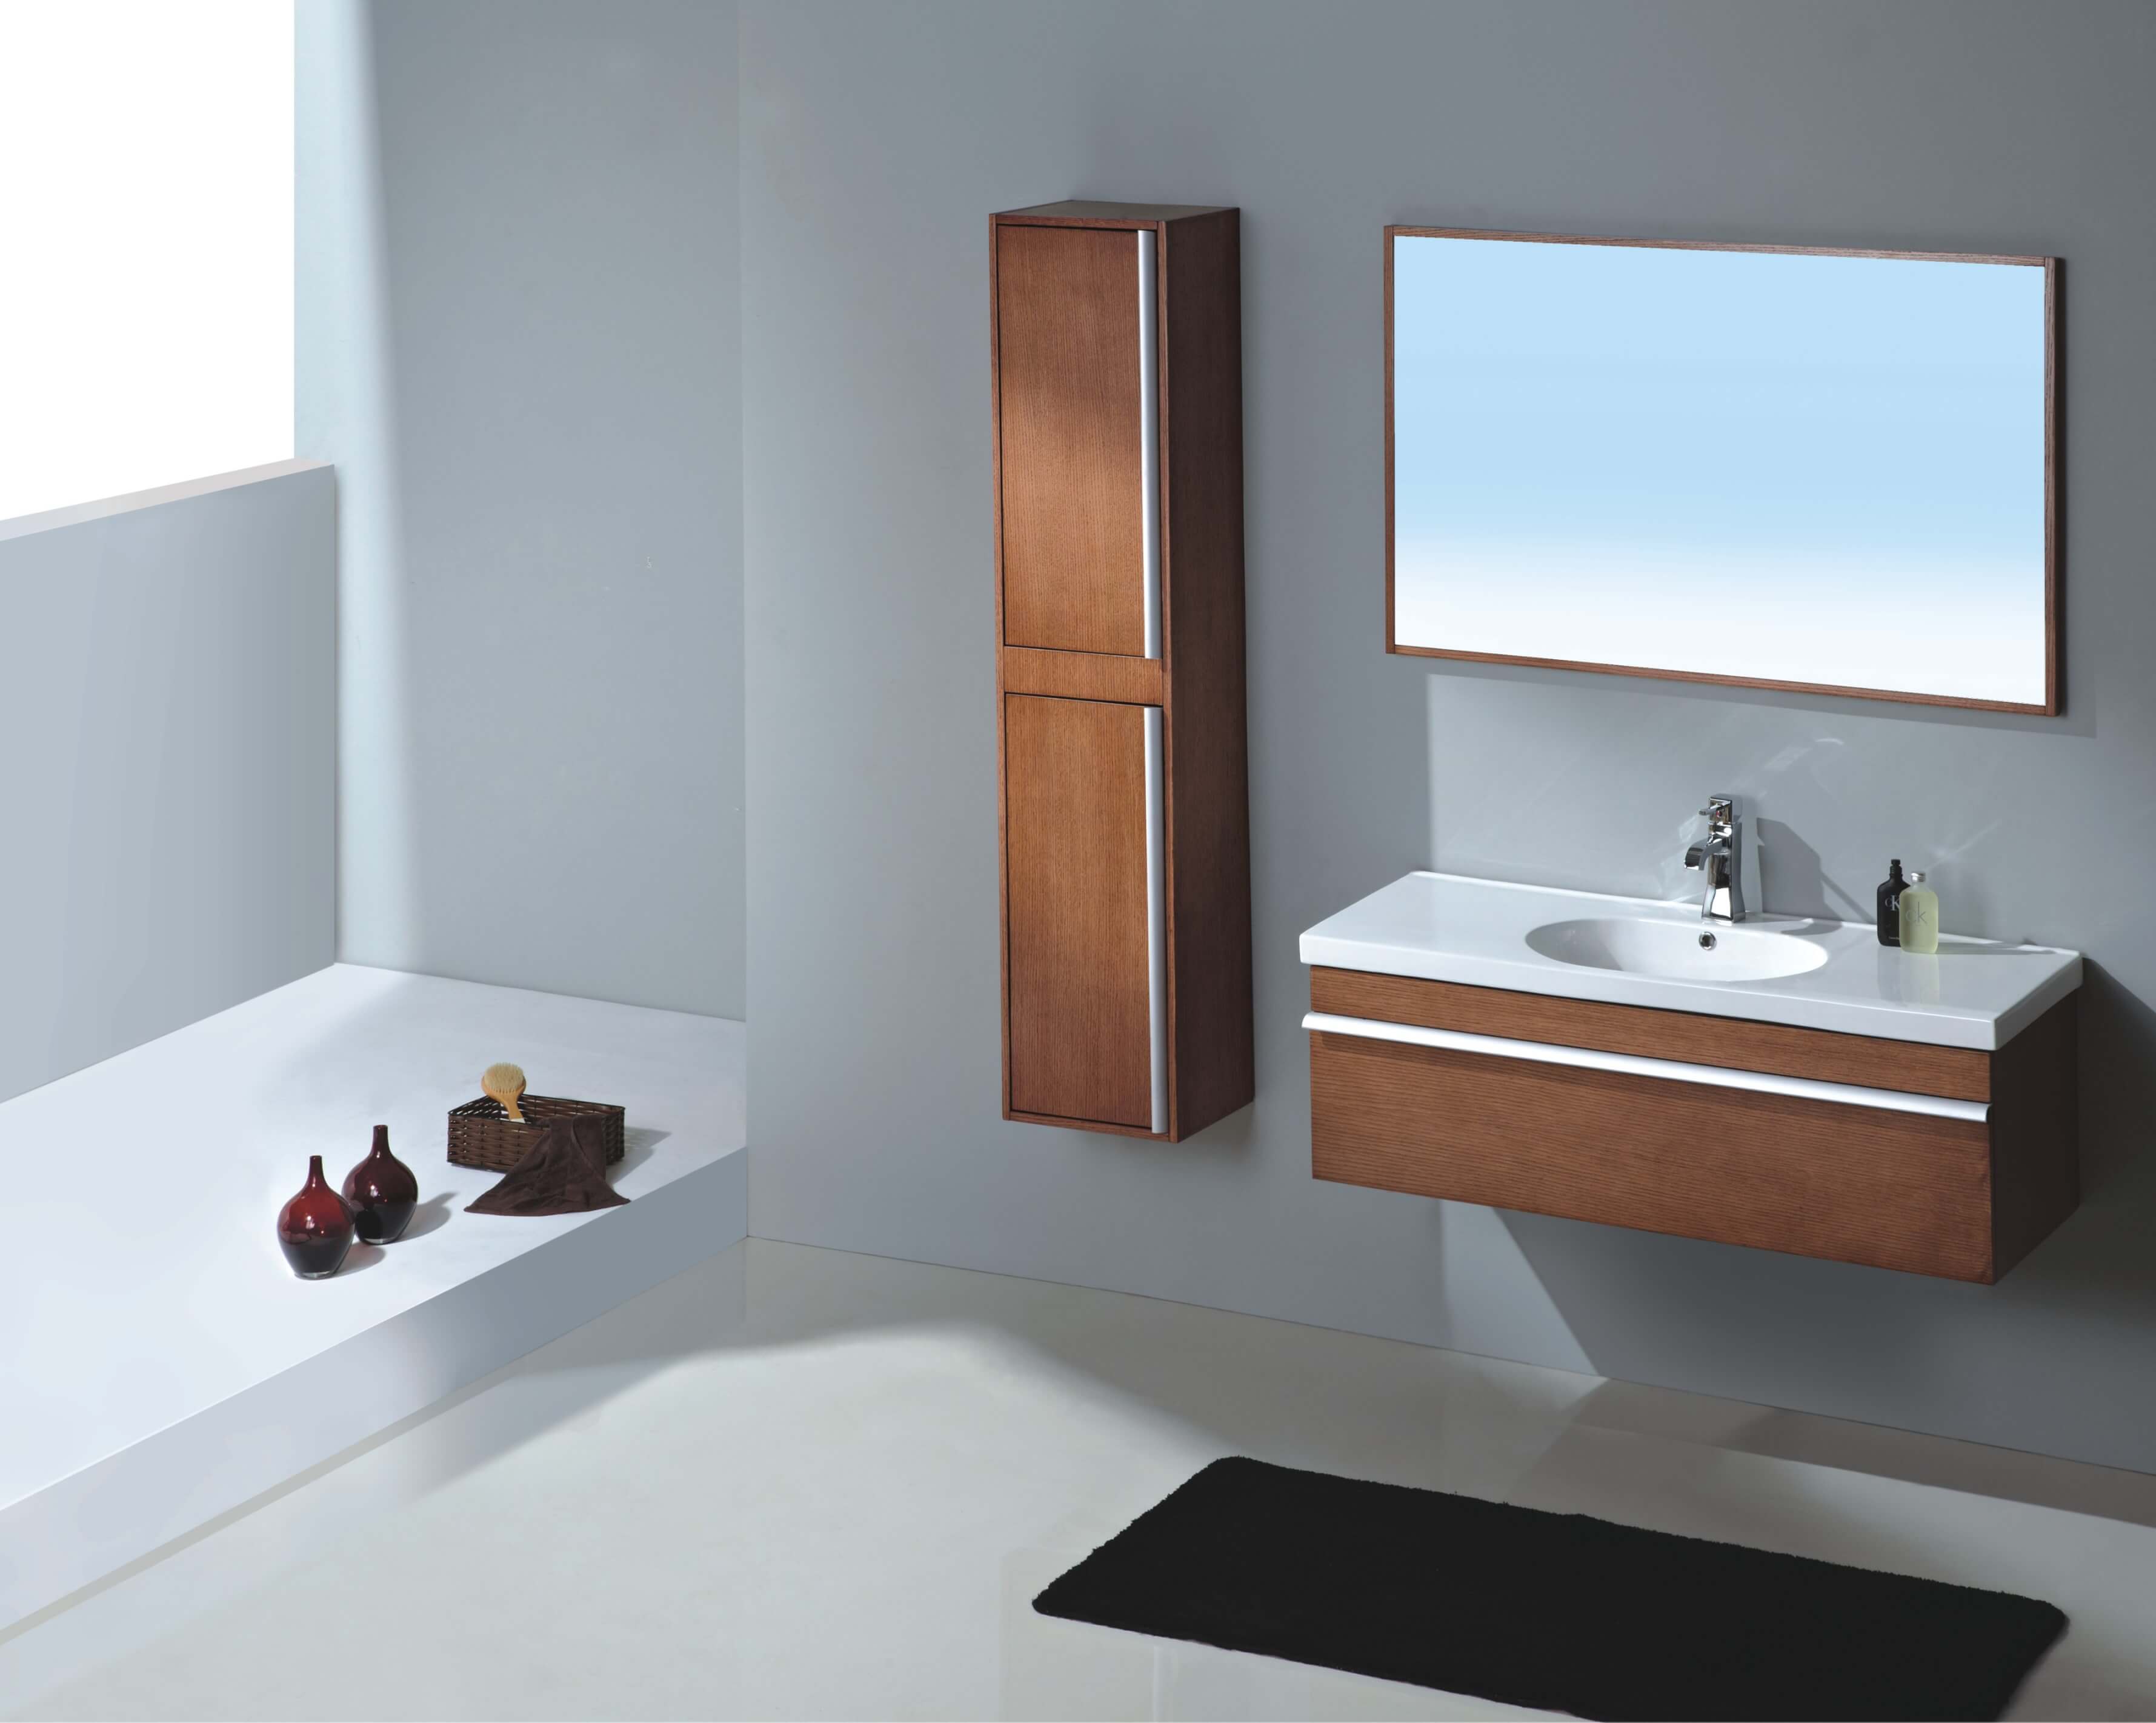 Bathroom sink design 17